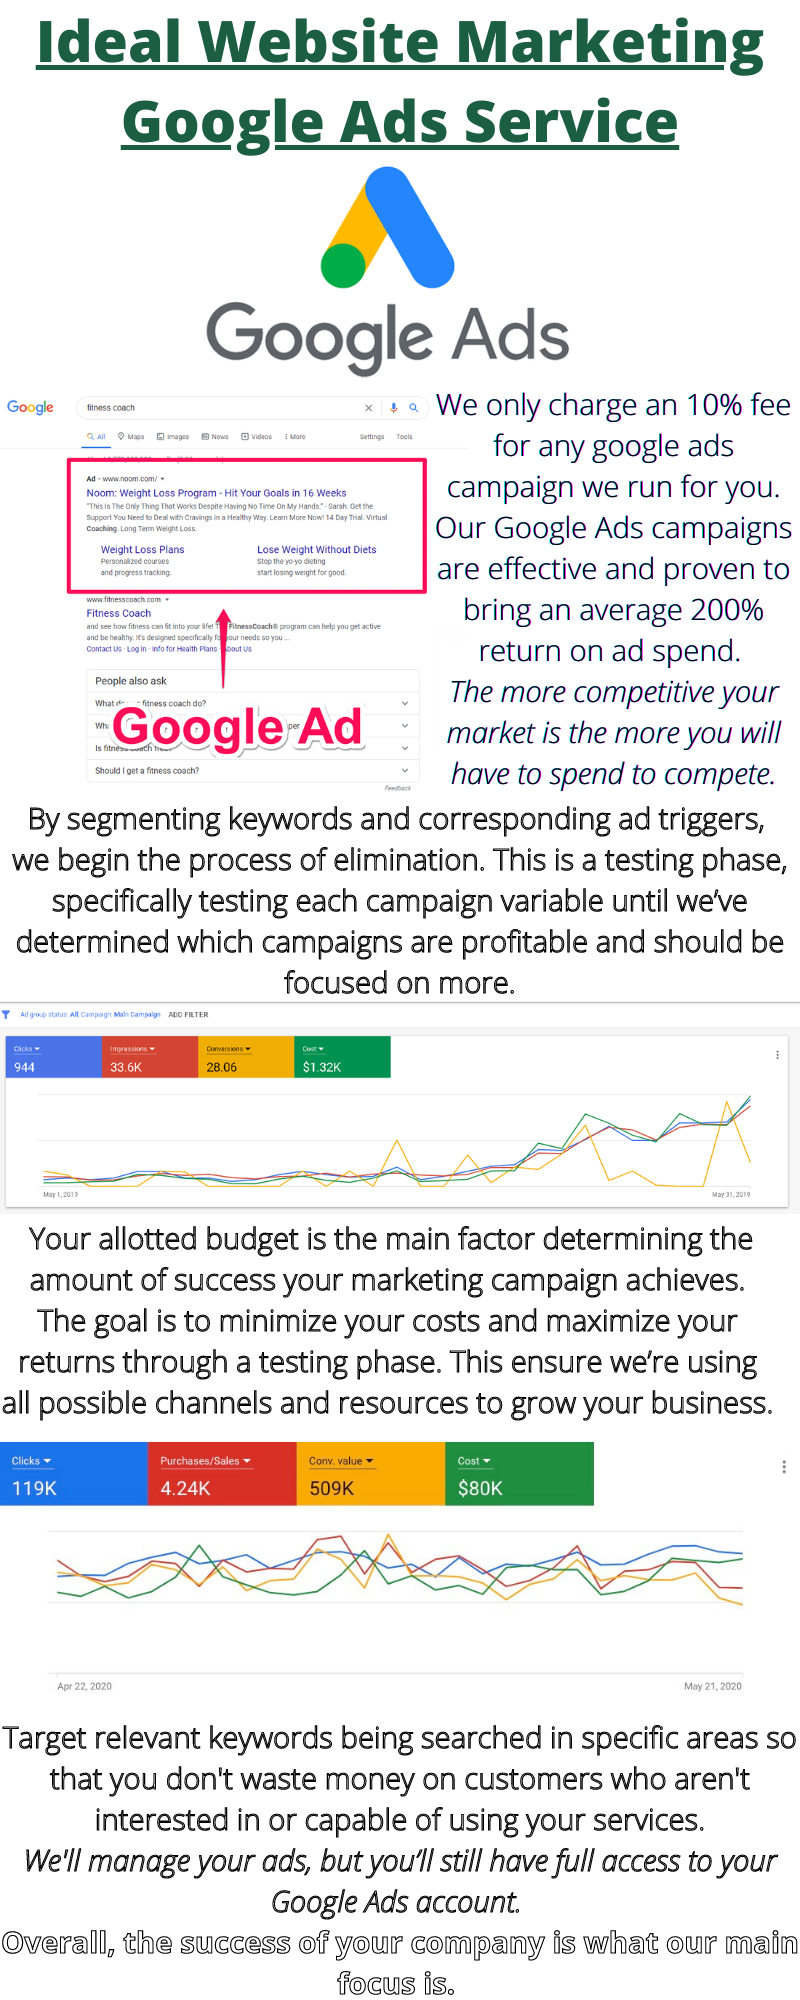 Ideal Website Marketing Google Ads Service